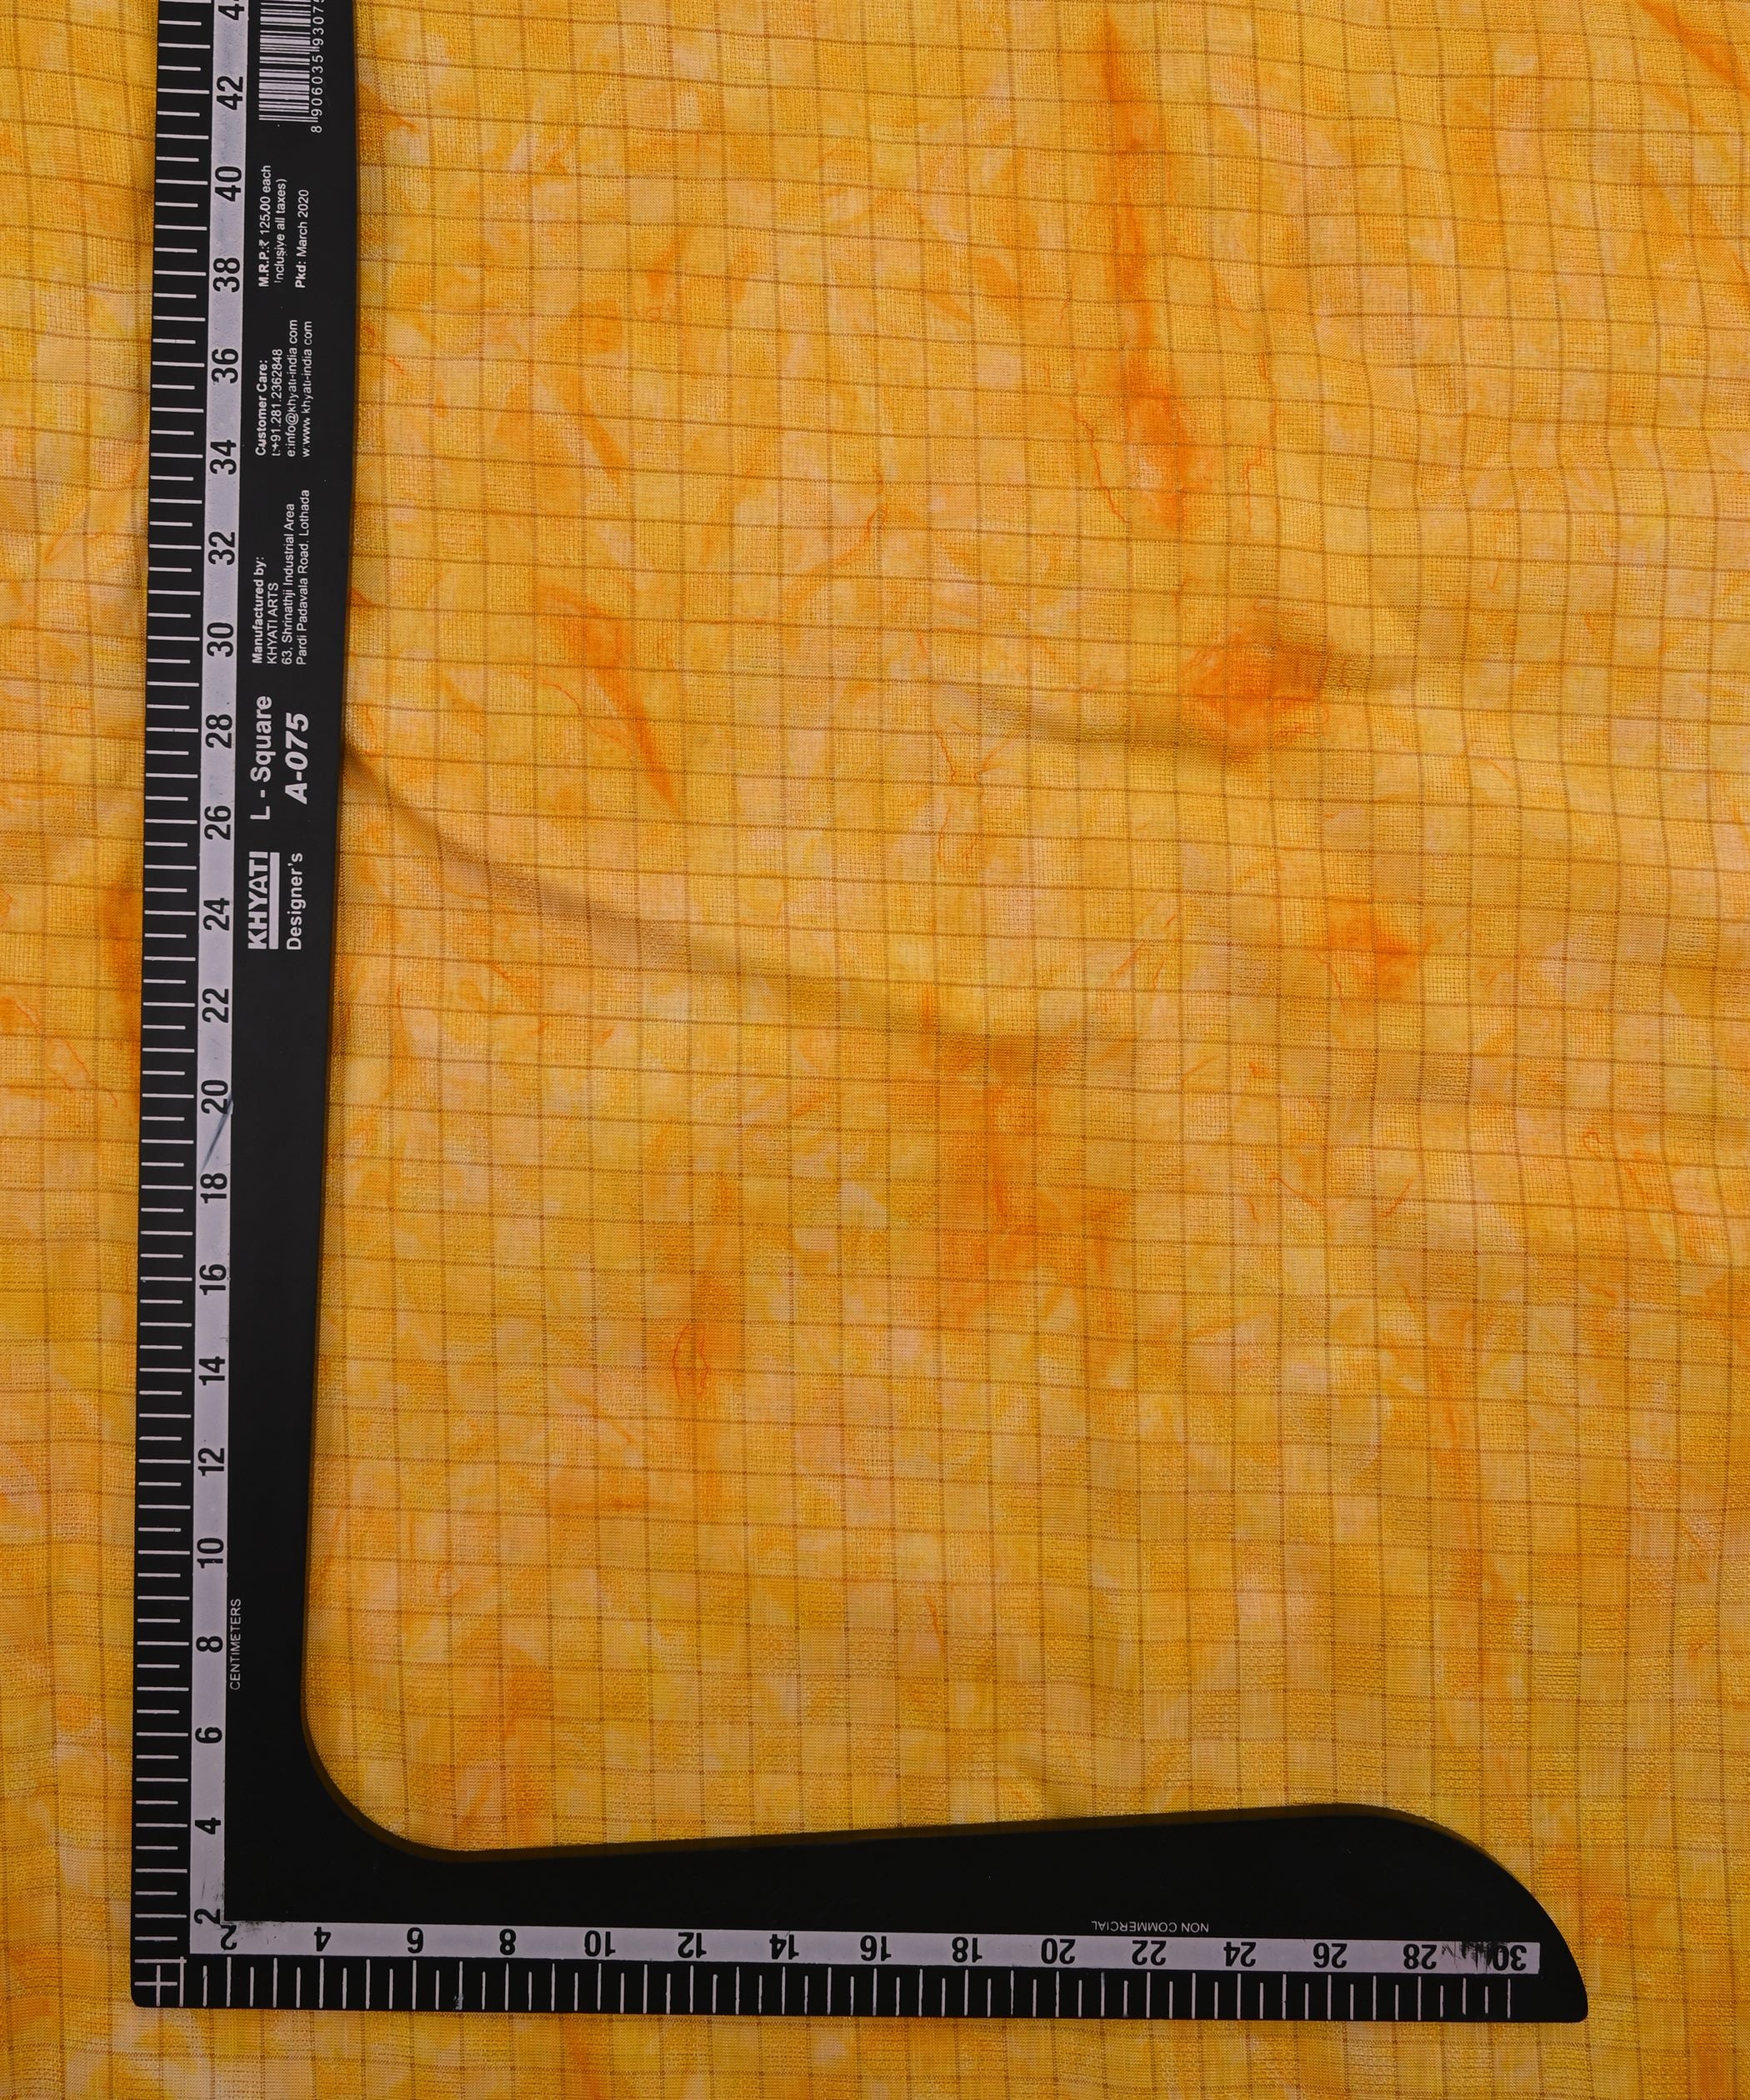 Gold Yellow Jute Fabric with Checks and Shibori Print